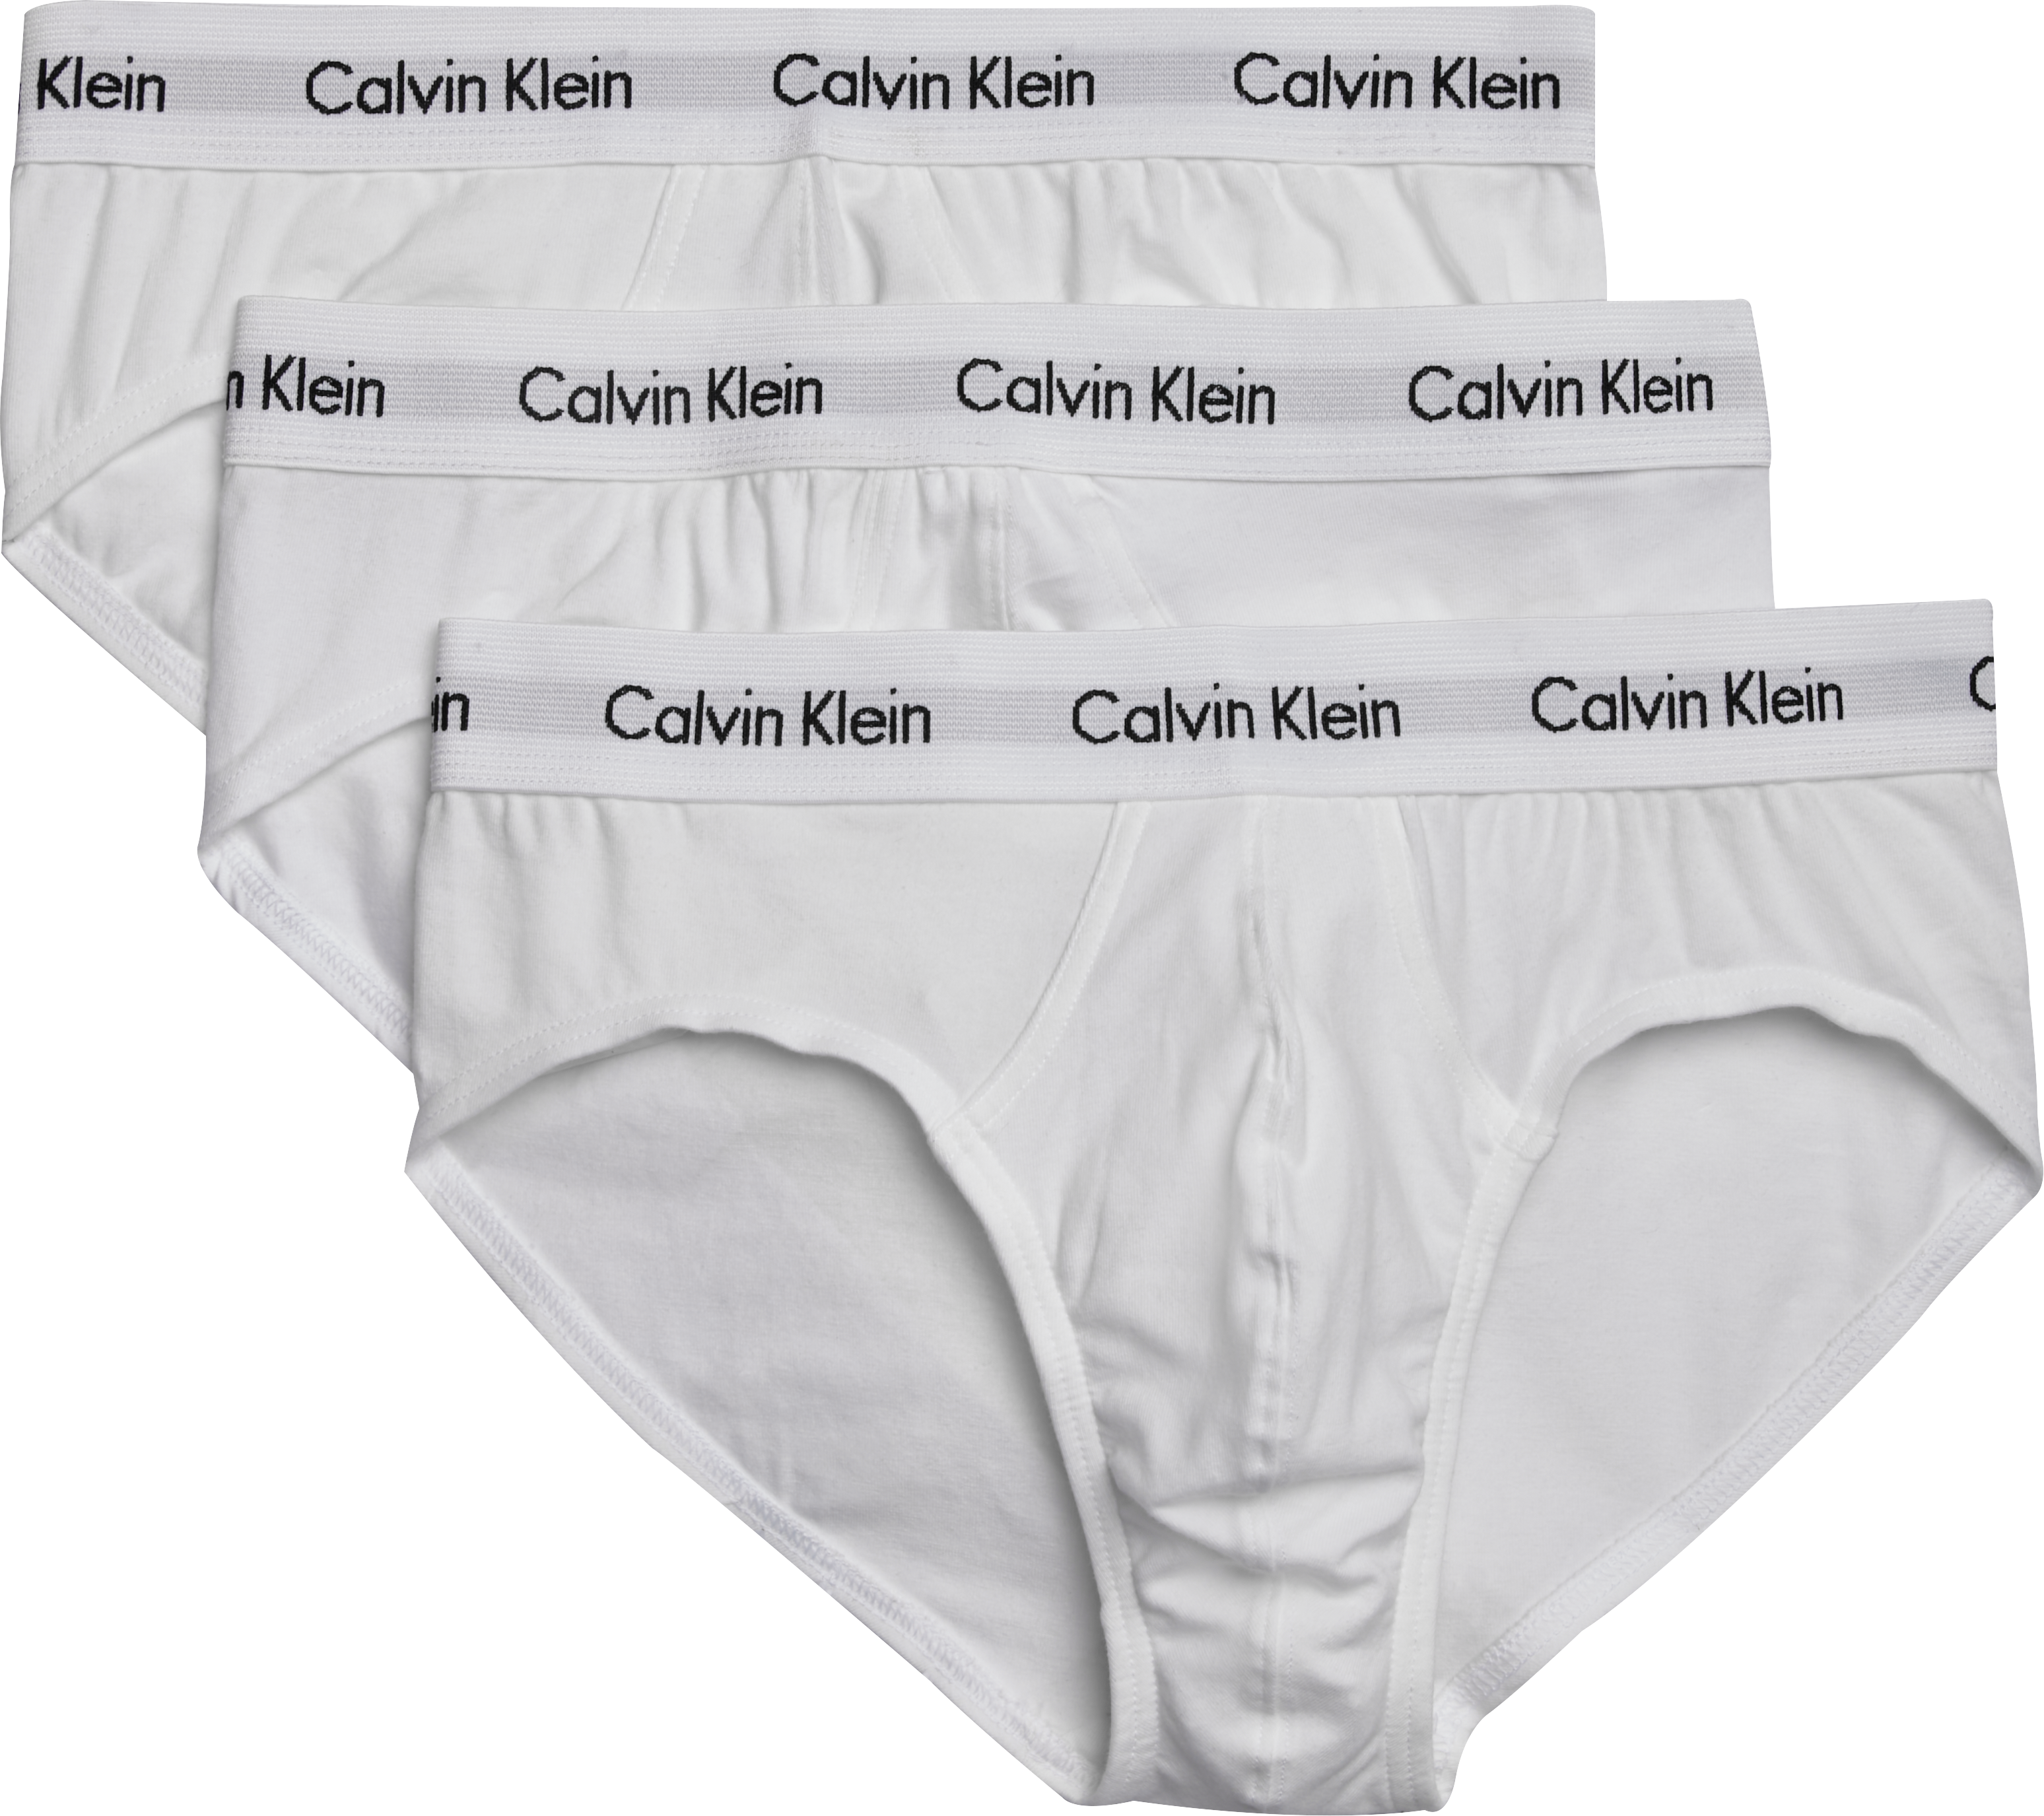 Calvin Klein Classic Fit Cotton Briefs, 3-pack, White, Men's Accessories